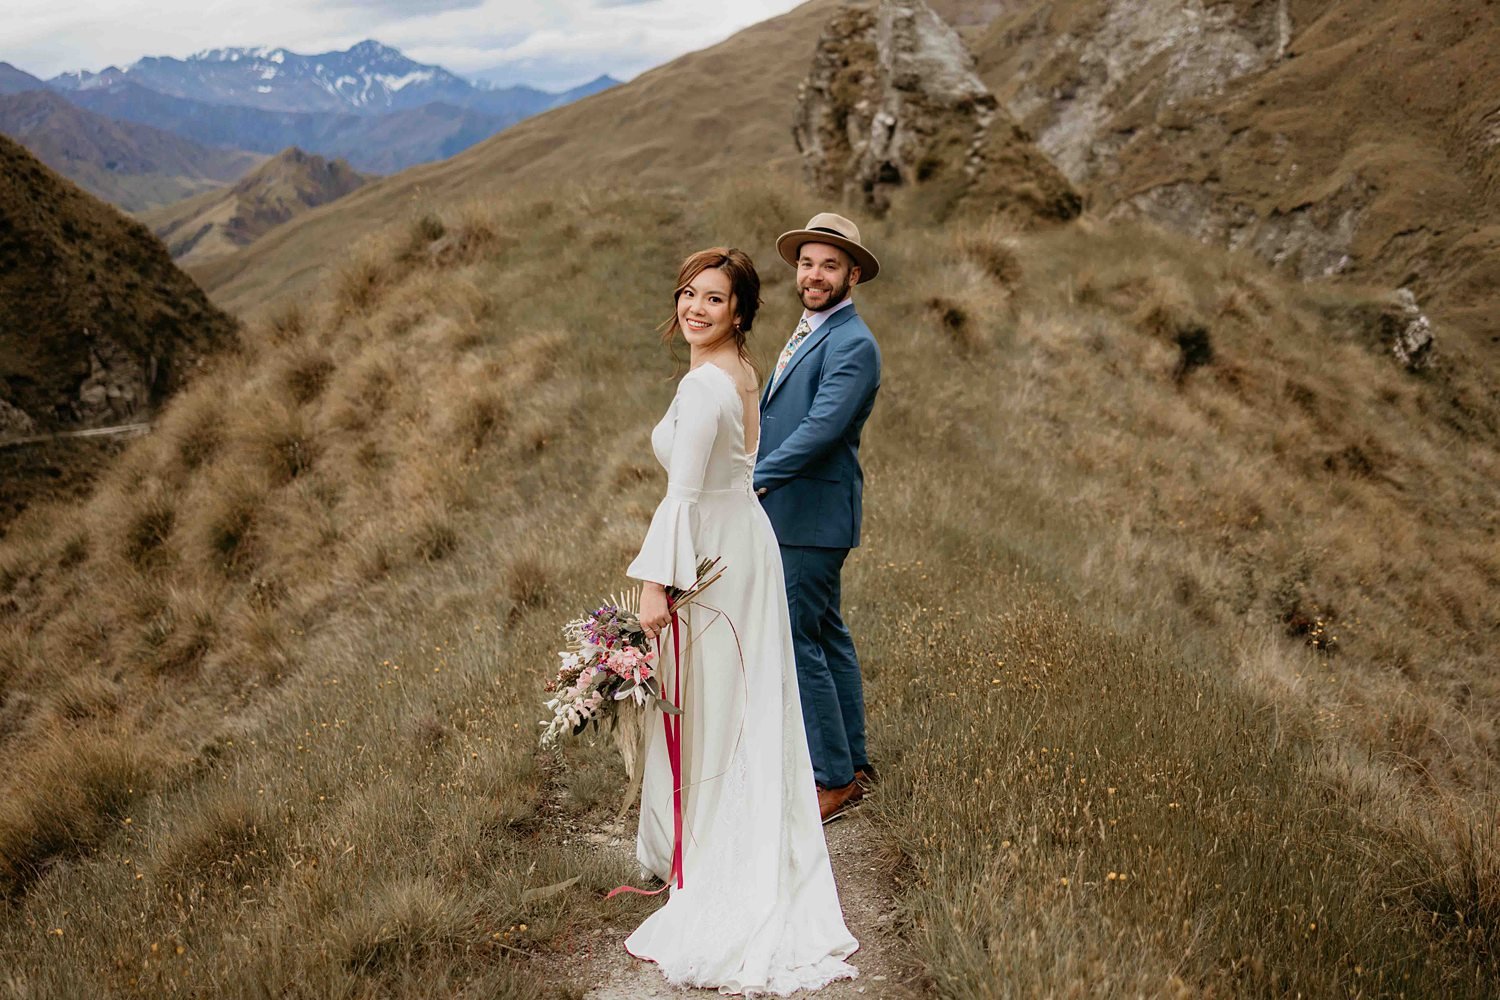 Ollie & Ritz |Panda Bay Films Wedding Photographer Queenstown New Zealand  Elopement Pre Wedding and Heli-Wedding Photography_-10.jpg